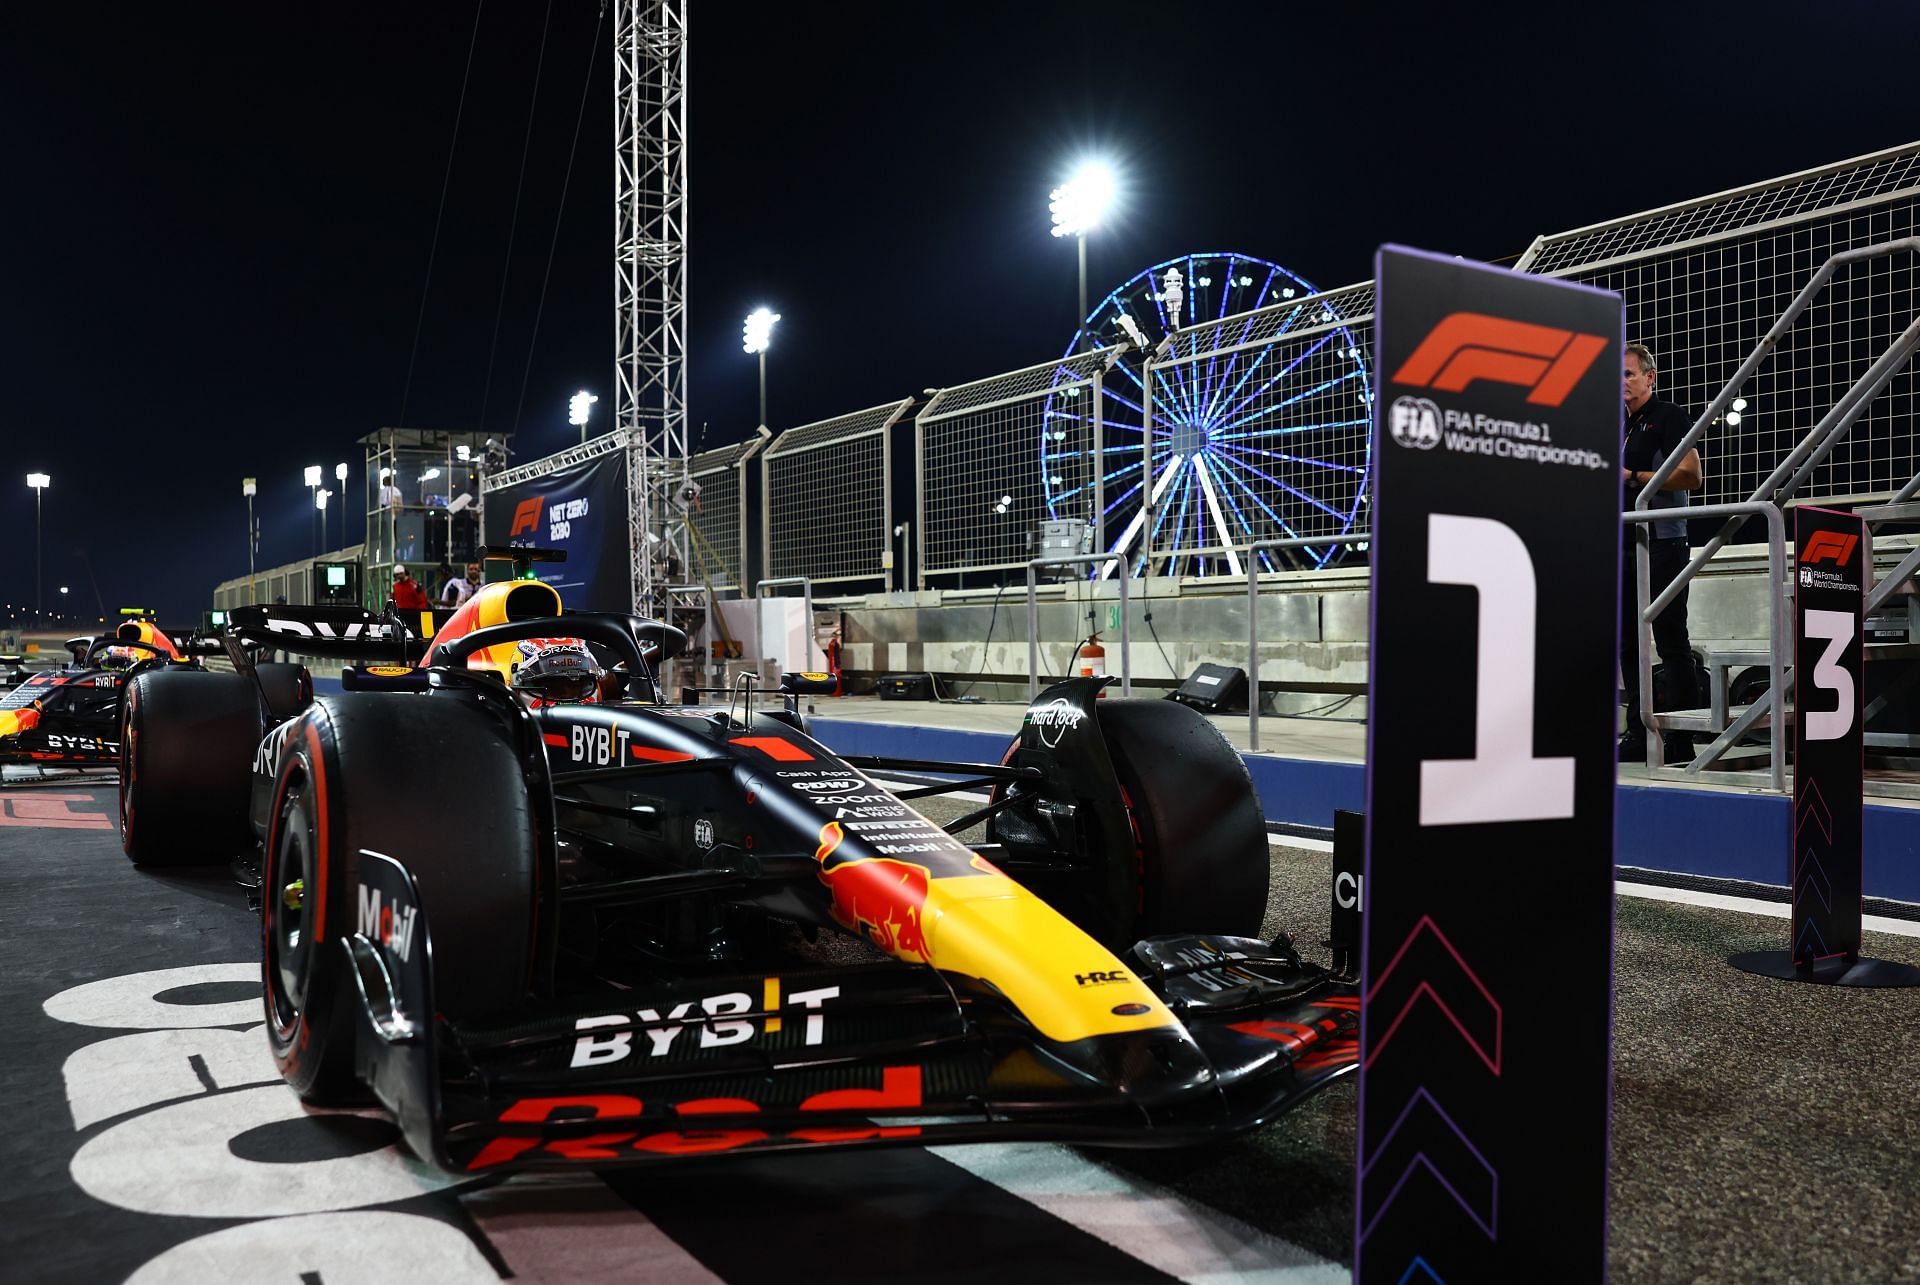 F1 Grand Prix of Bahrain - Qualifying